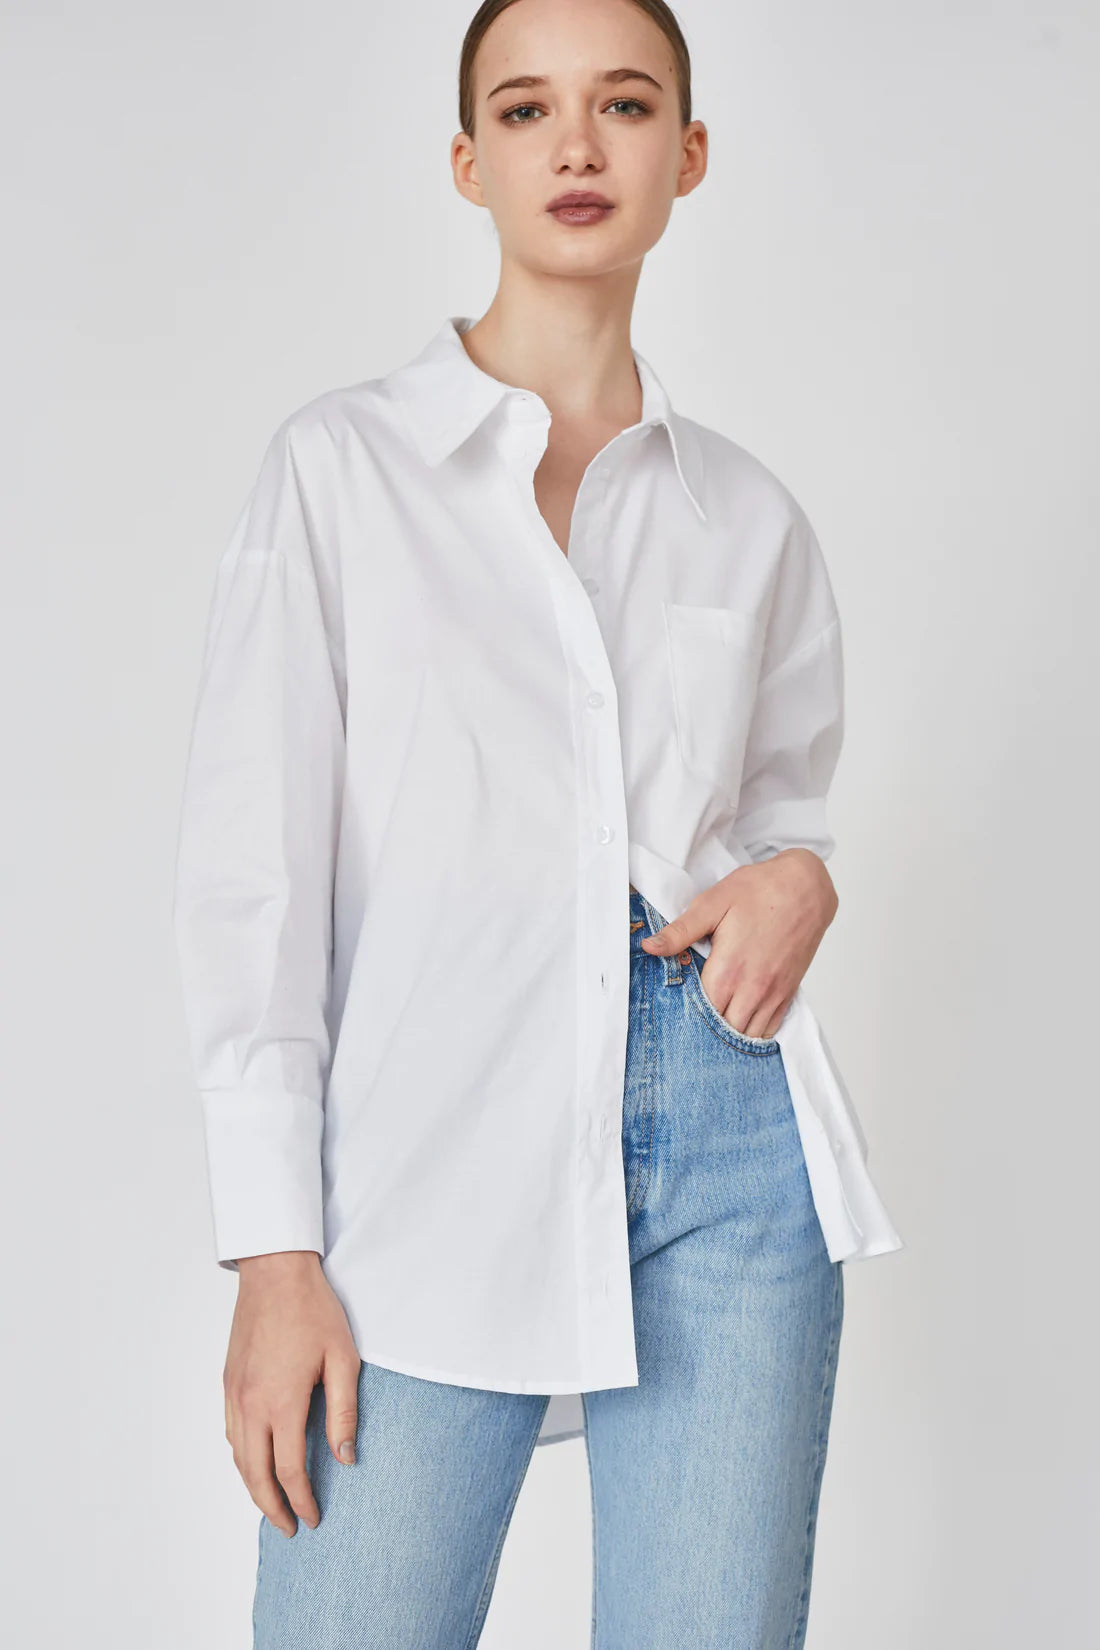 Deluc Rizzo White Oversized Button Down Shirt